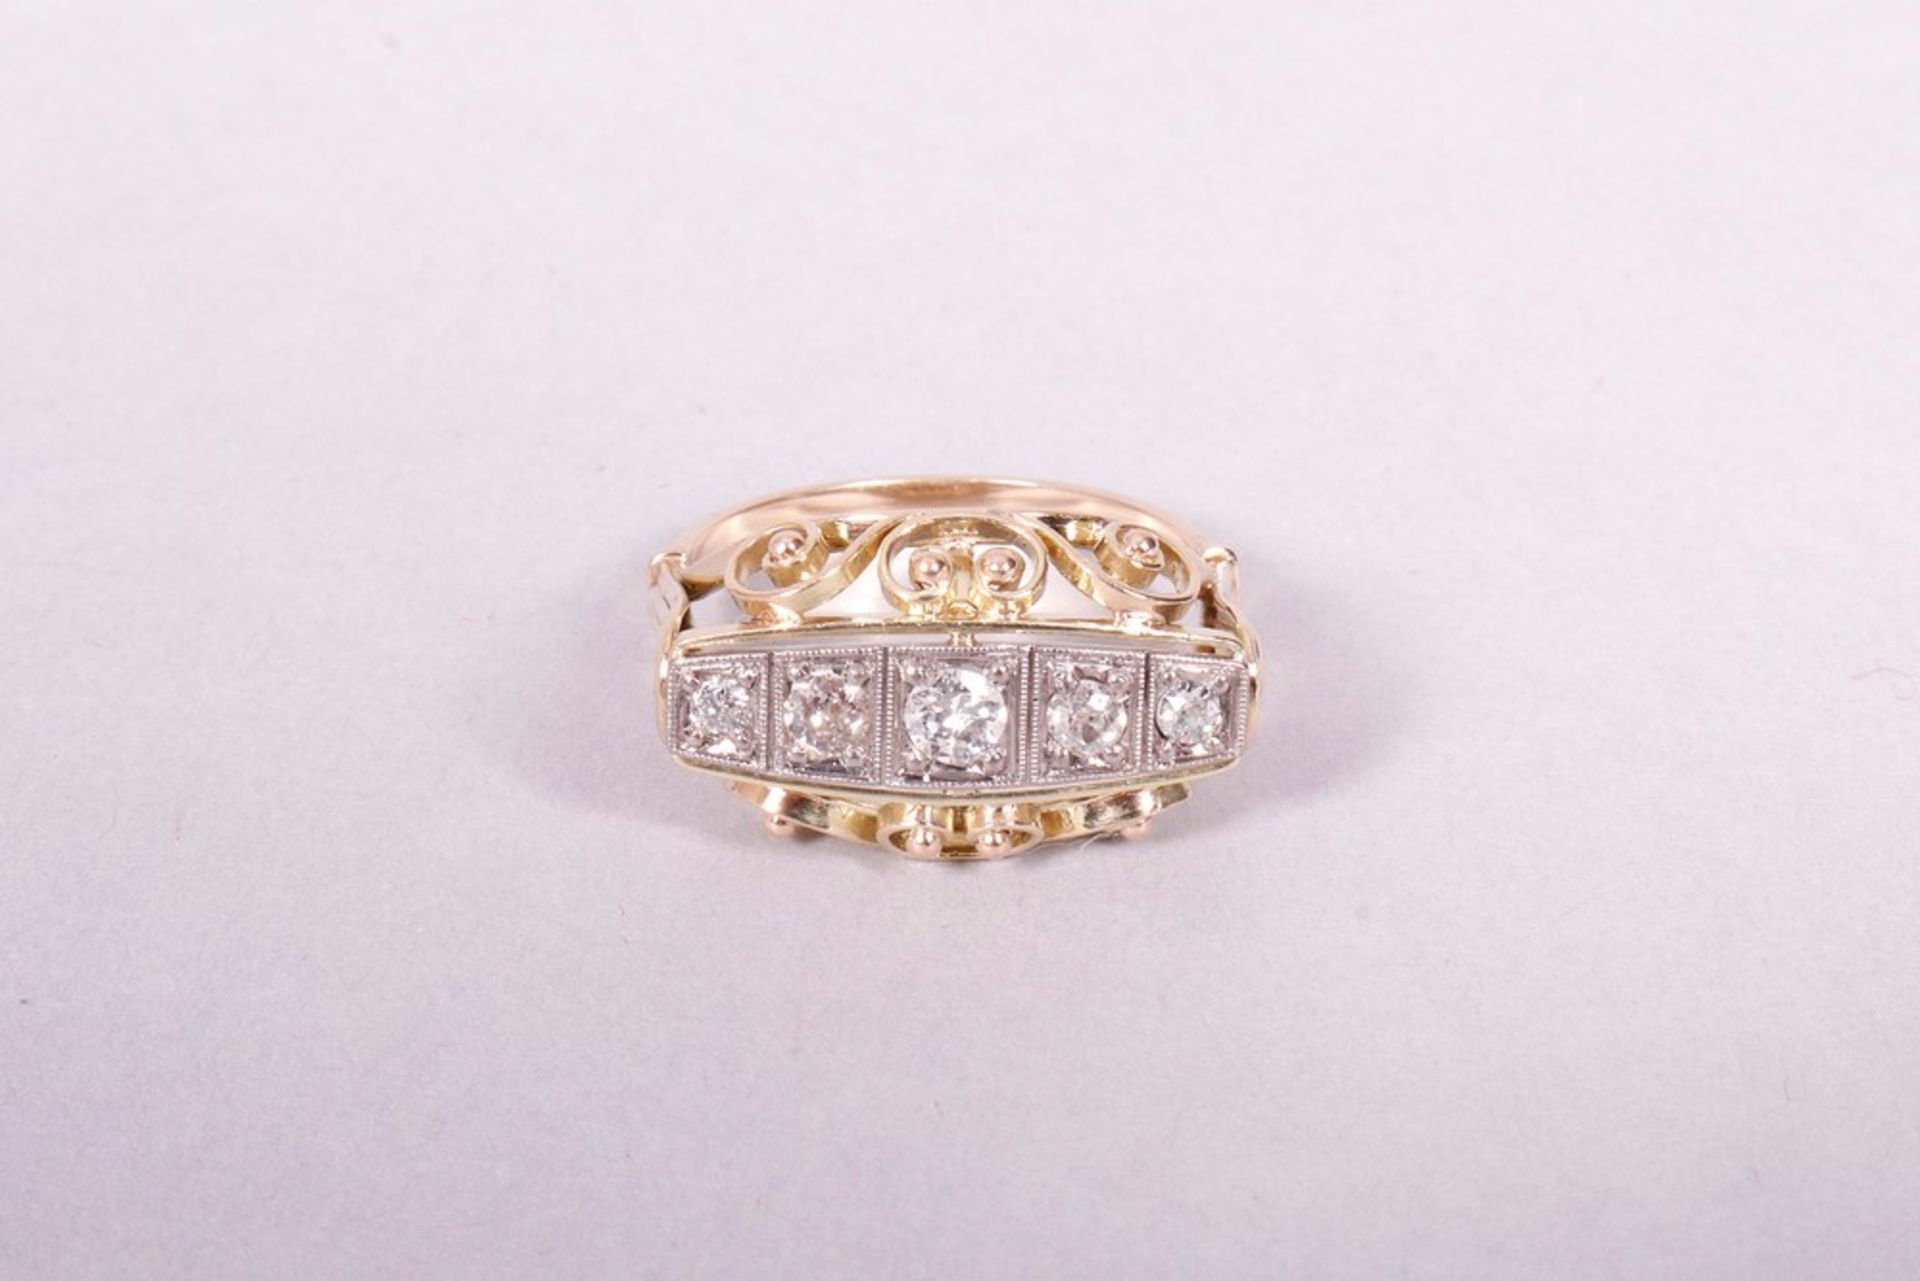 Art Nouveau ring, 585 gold - Image 3 of 5